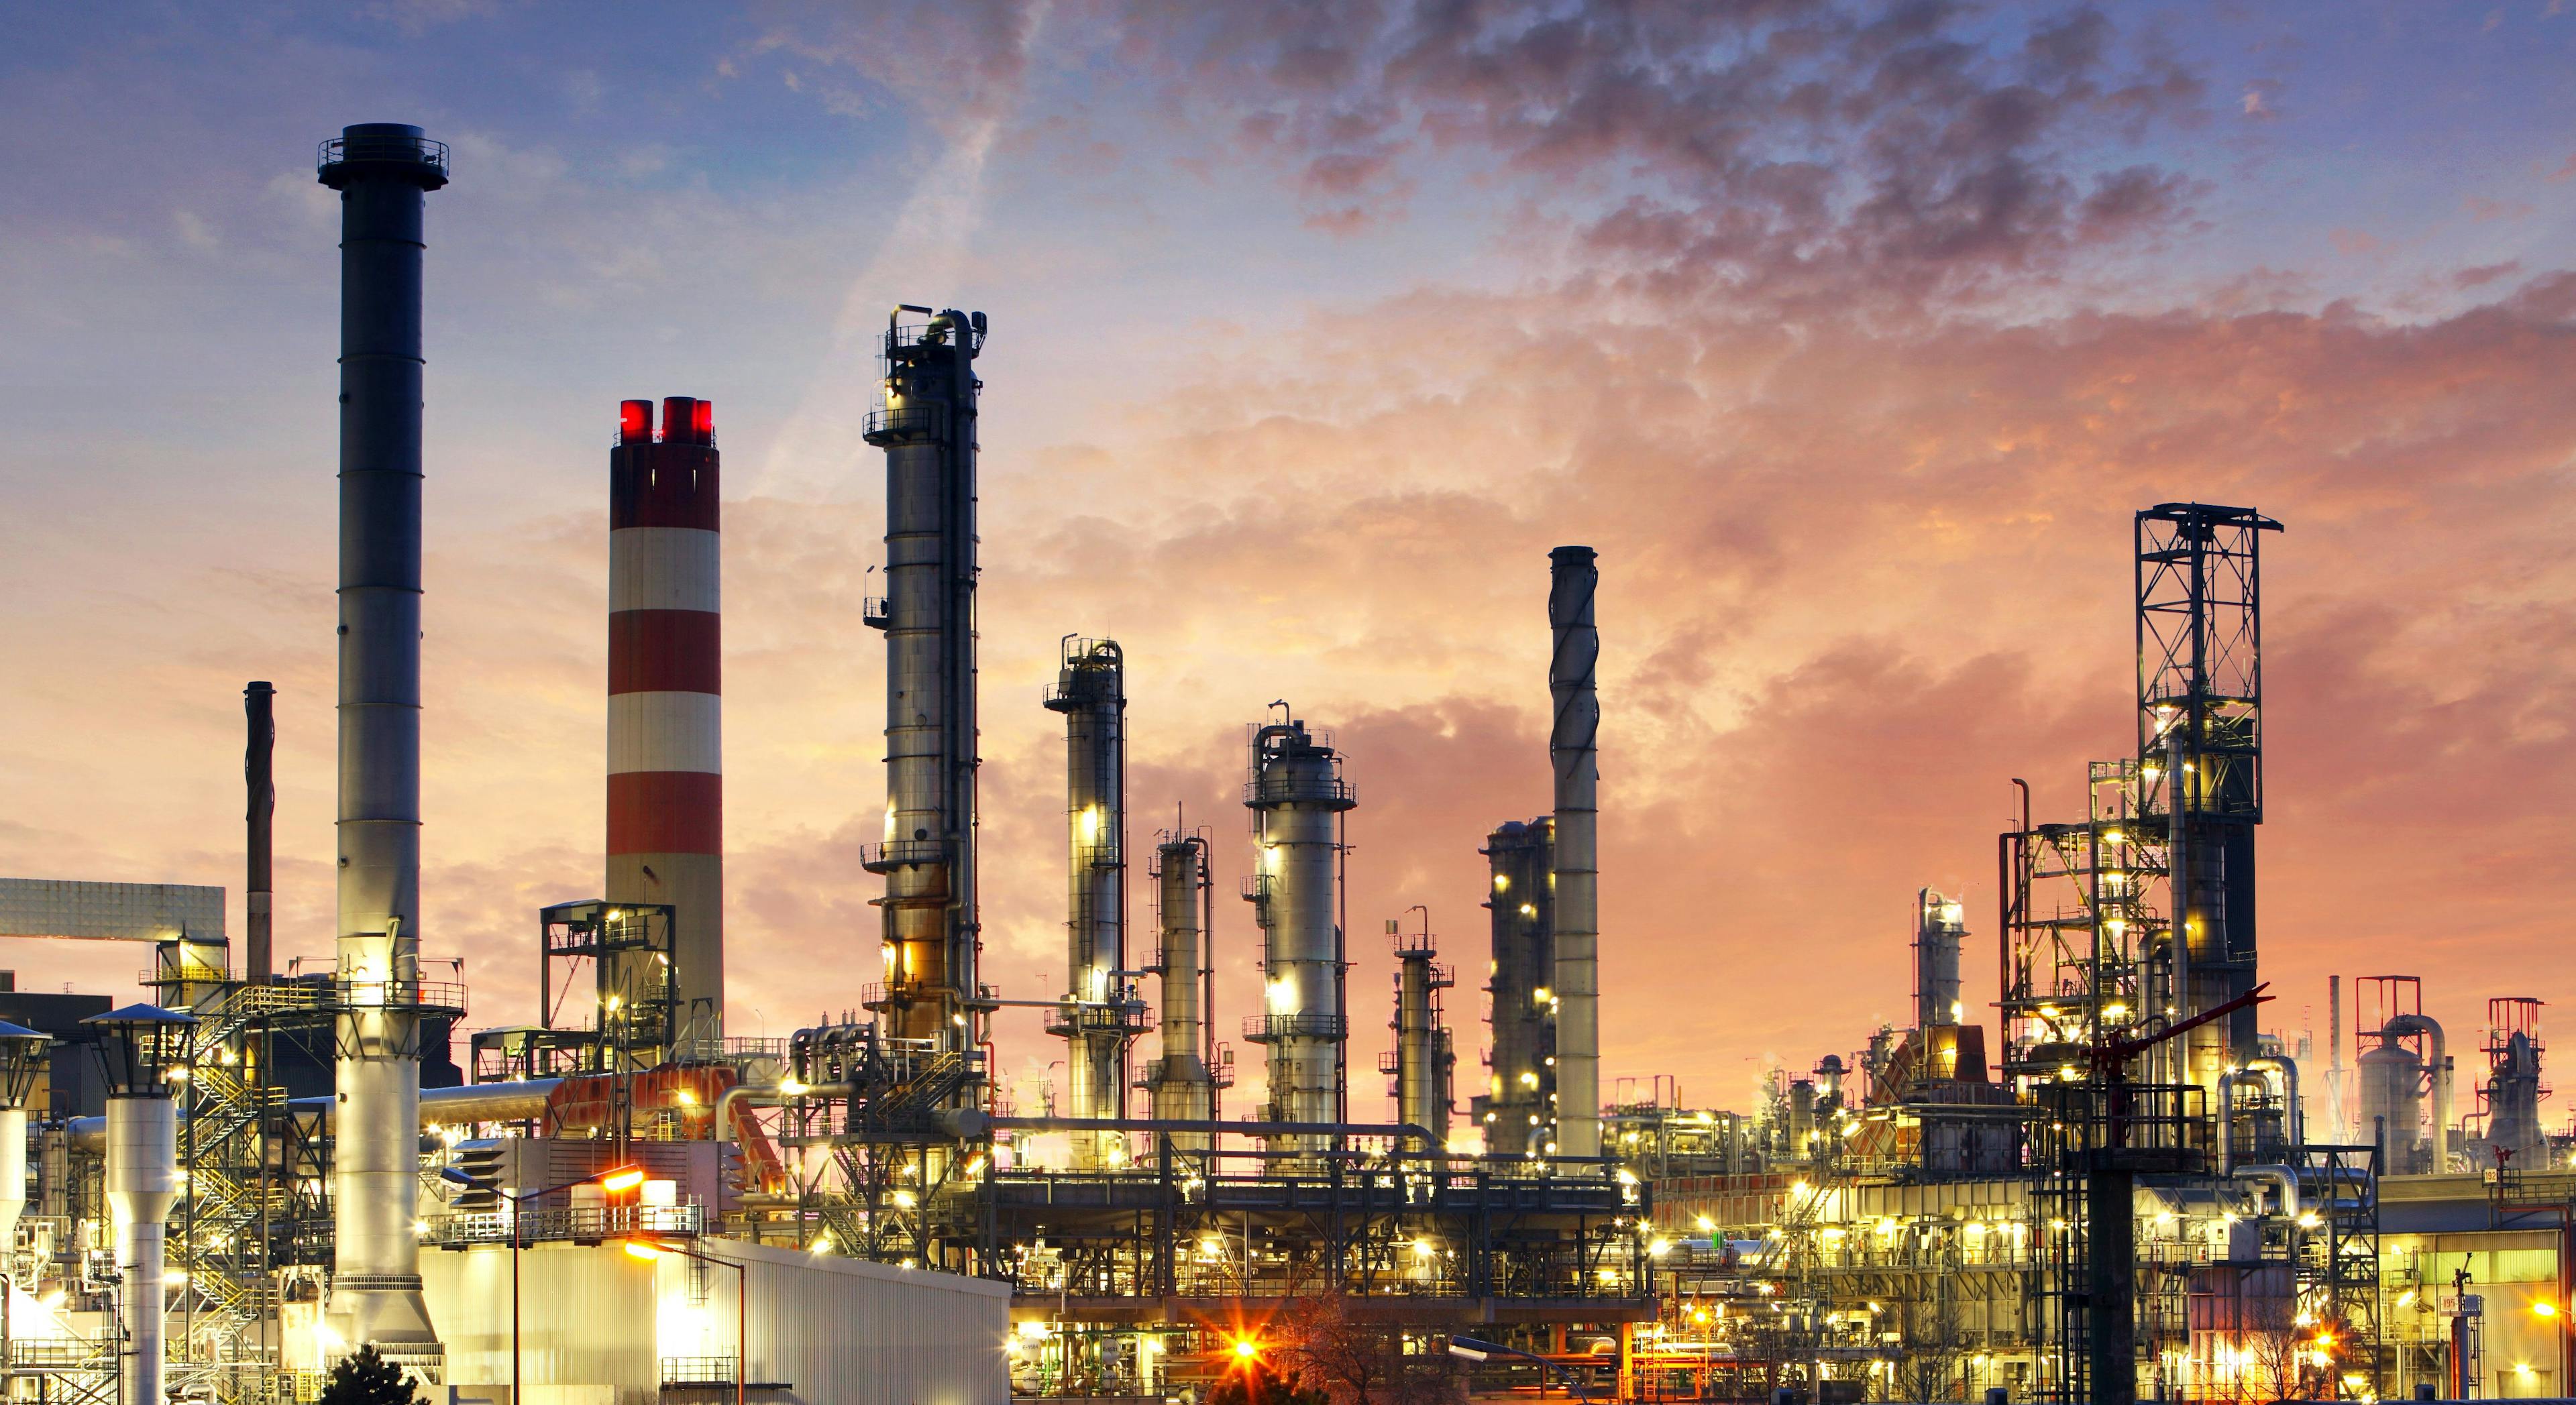 Factory - oil and gas industry | Image Credit: © TTstudio - stock.adobe.com